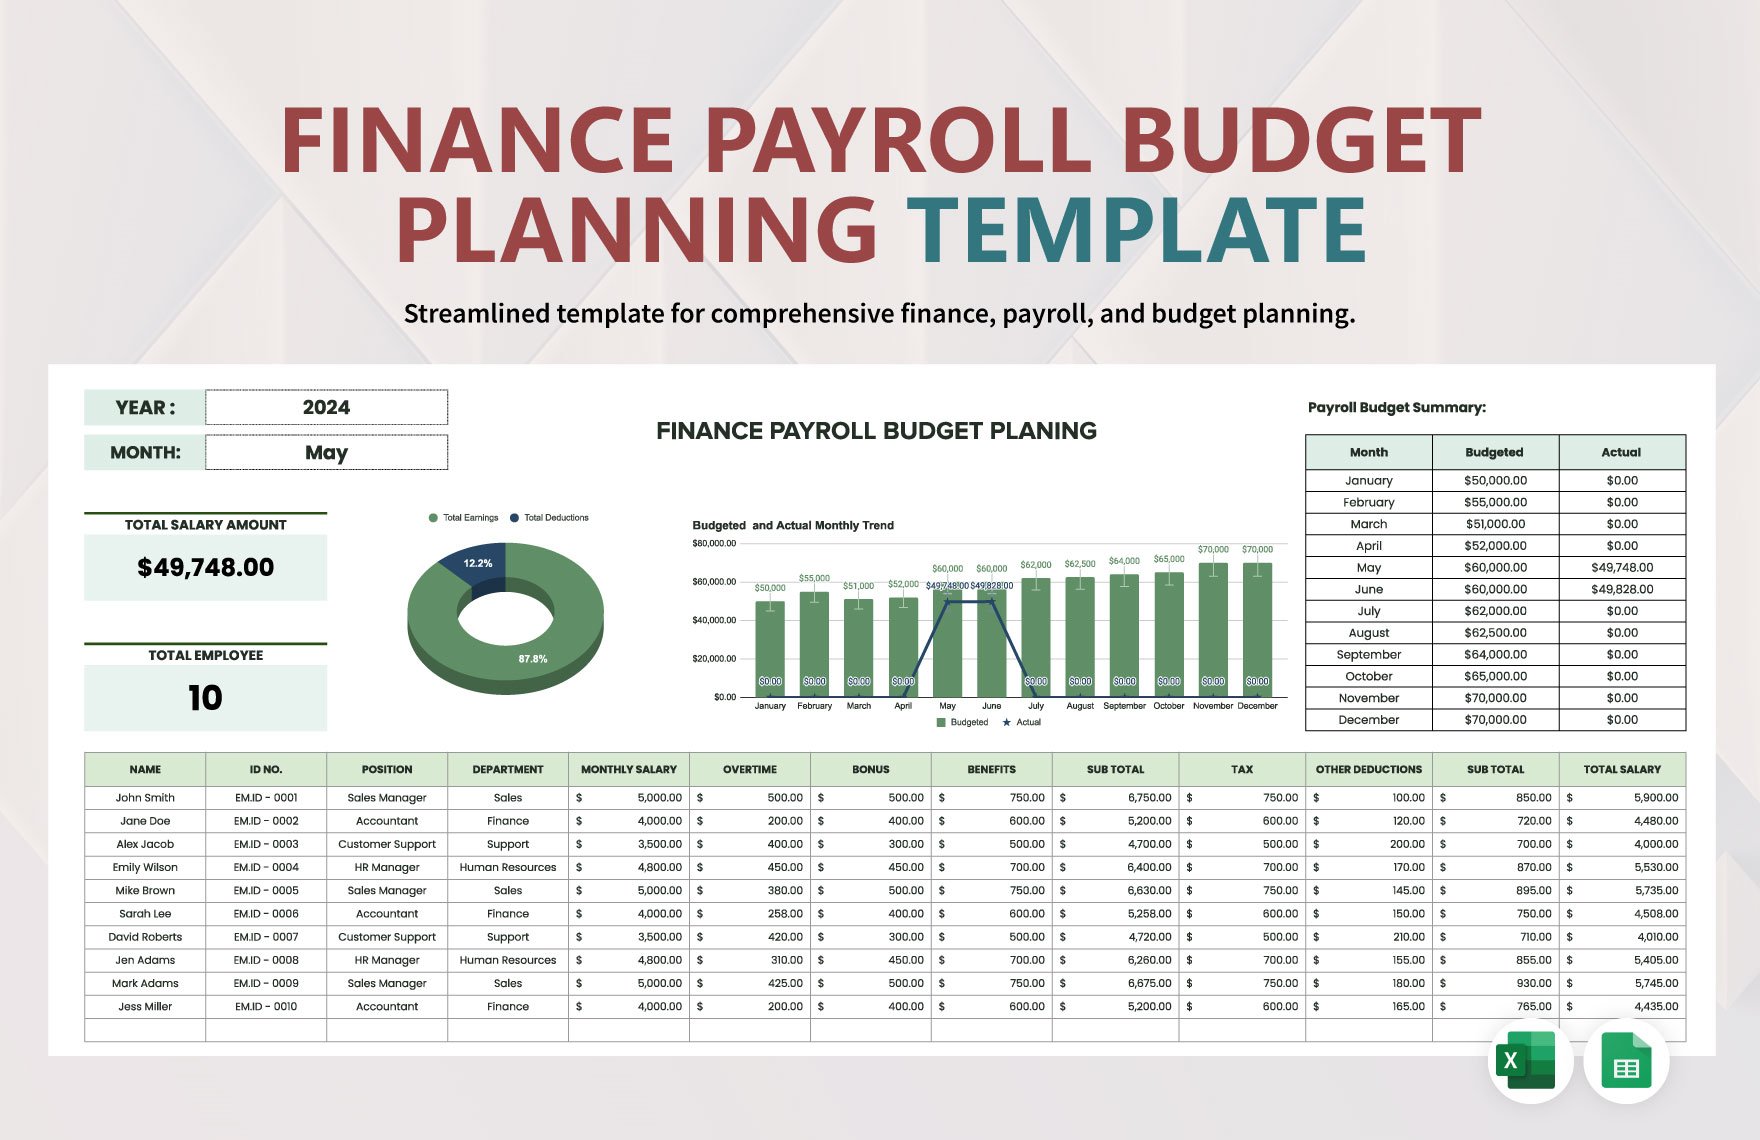 Finance Payroll Budget Planning Template